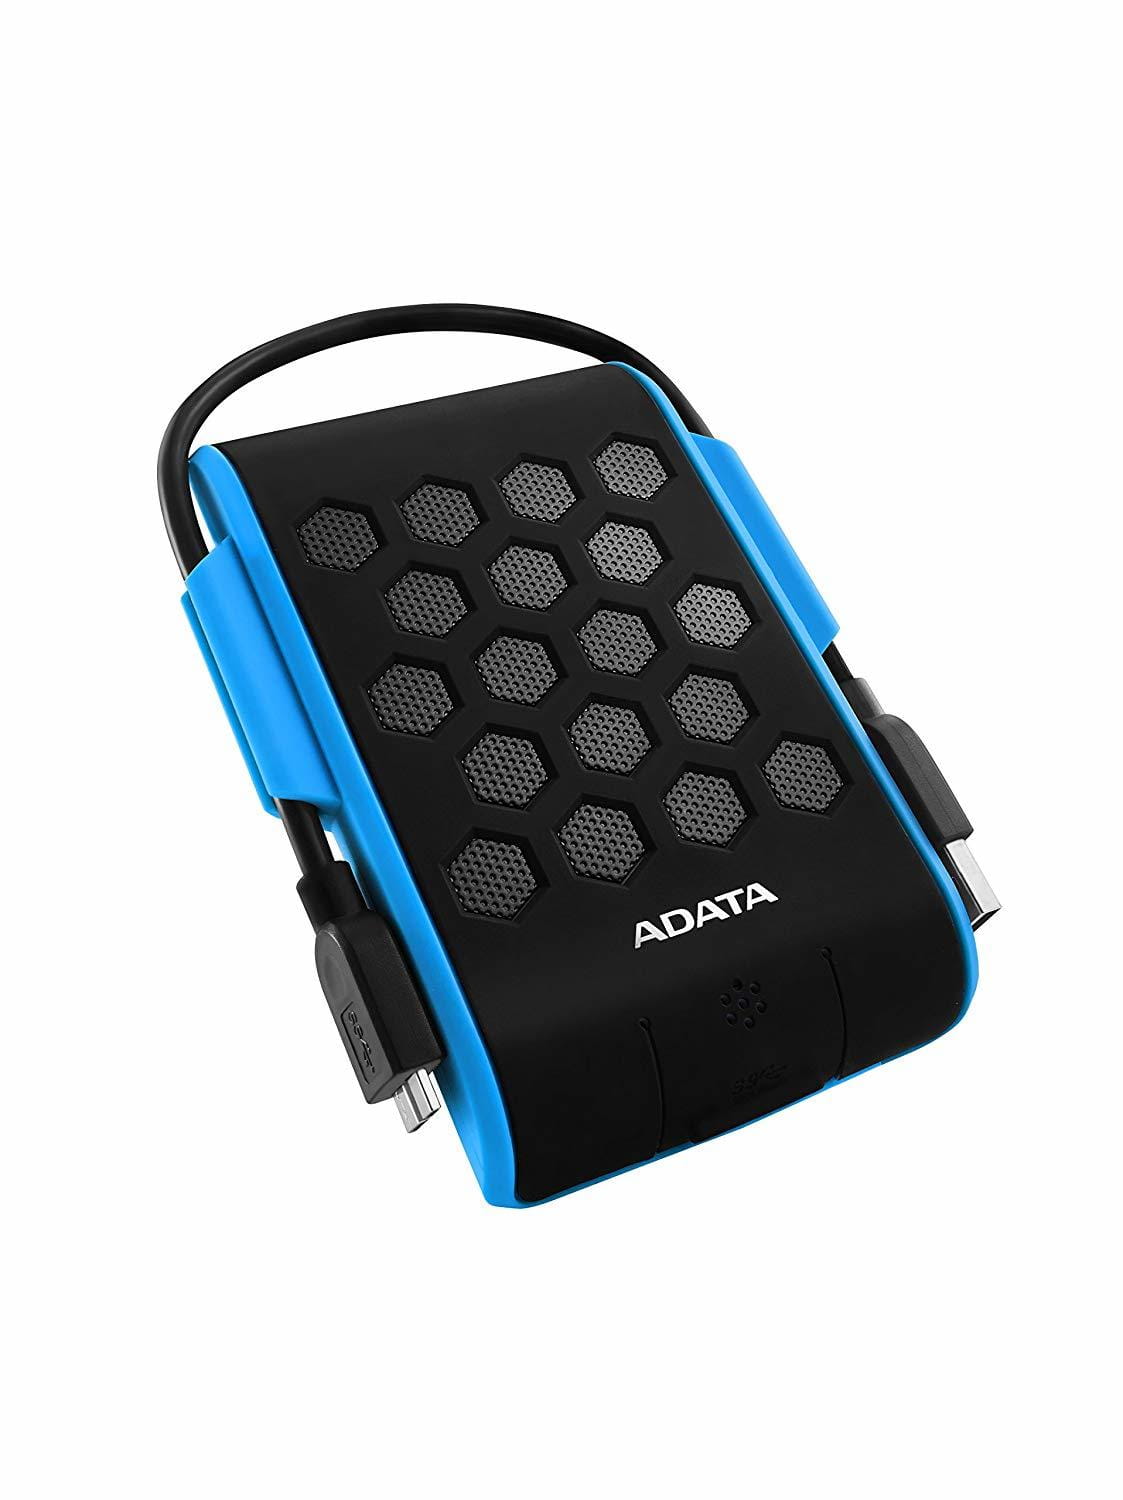 ADATA DashDrive Durable HD720 / 1.0TB / 2.5" / USB3.0 / AHD720-1TU3 /